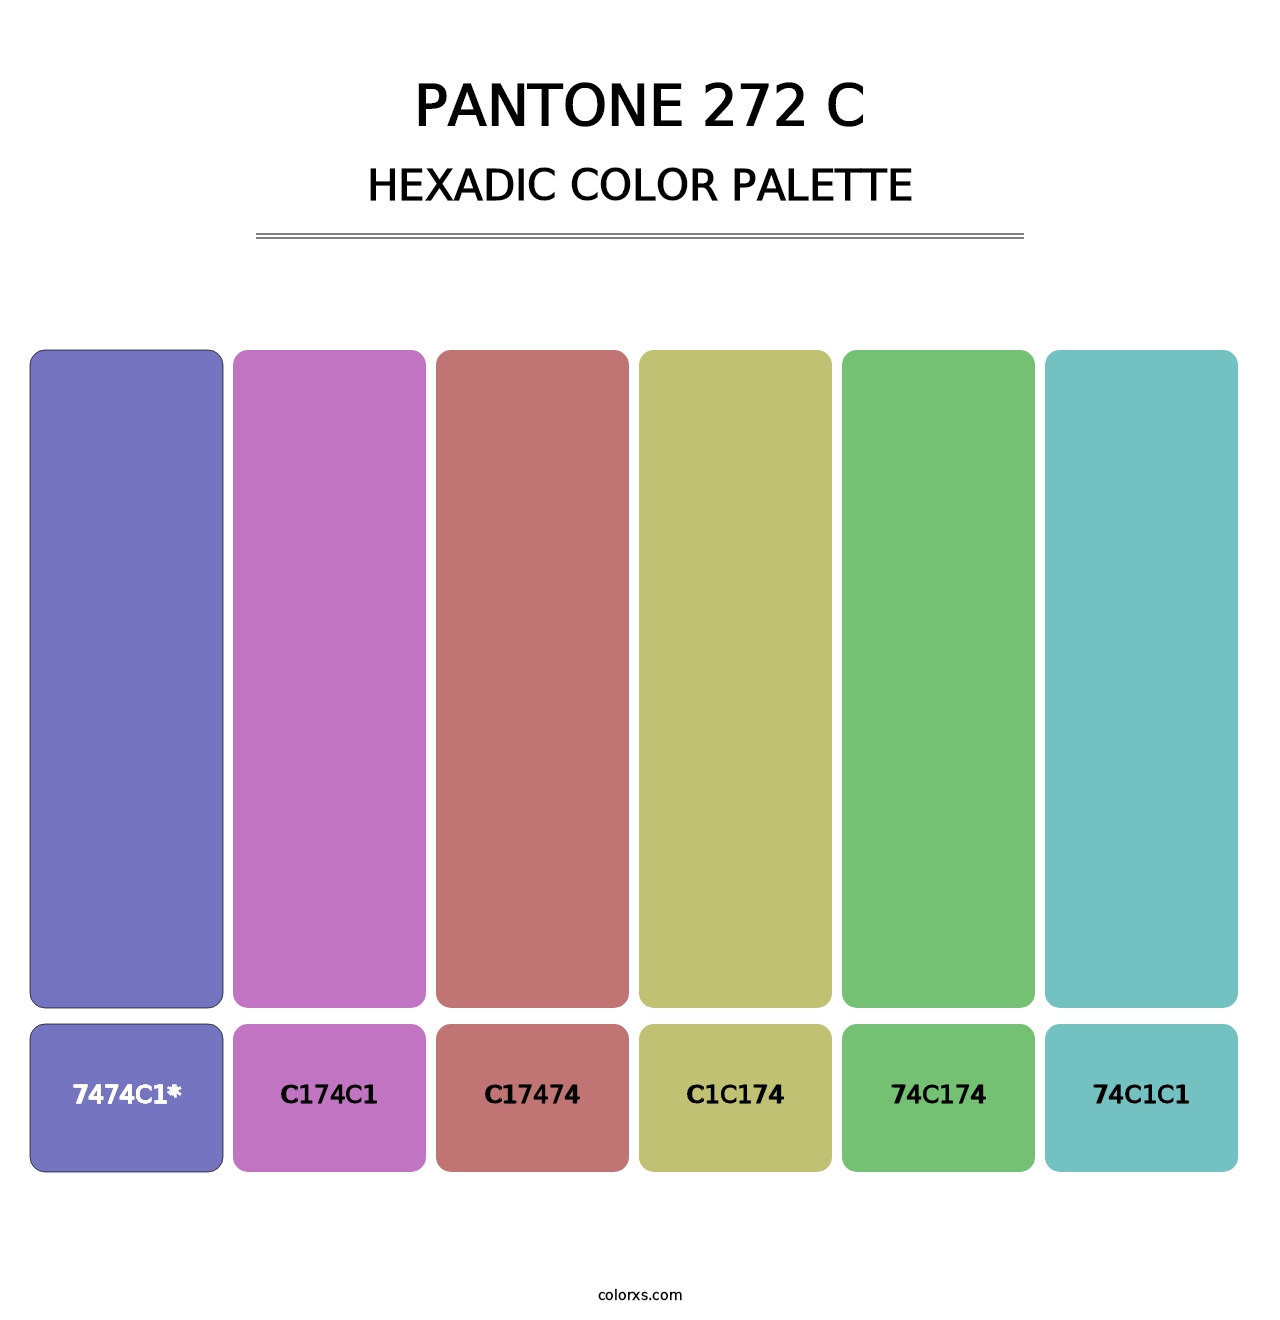 PANTONE 272 C - Hexadic Color Palette